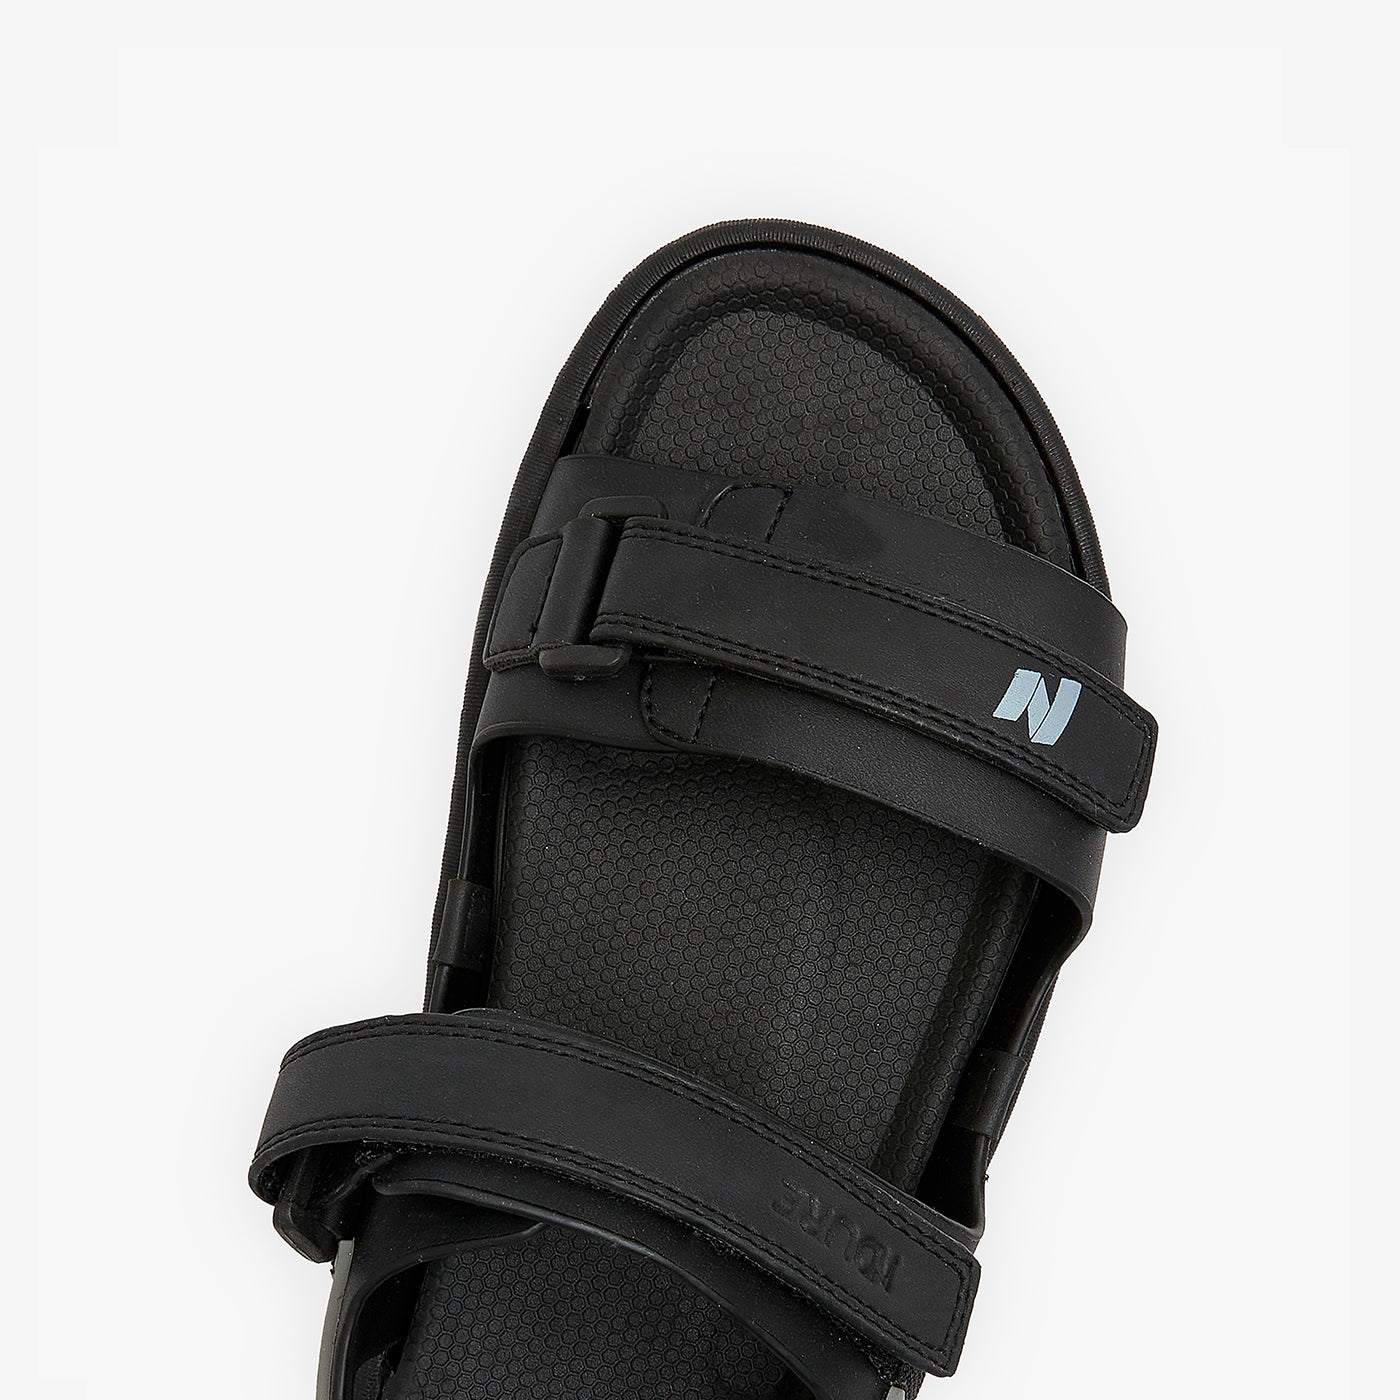 Men's Casual Sandals